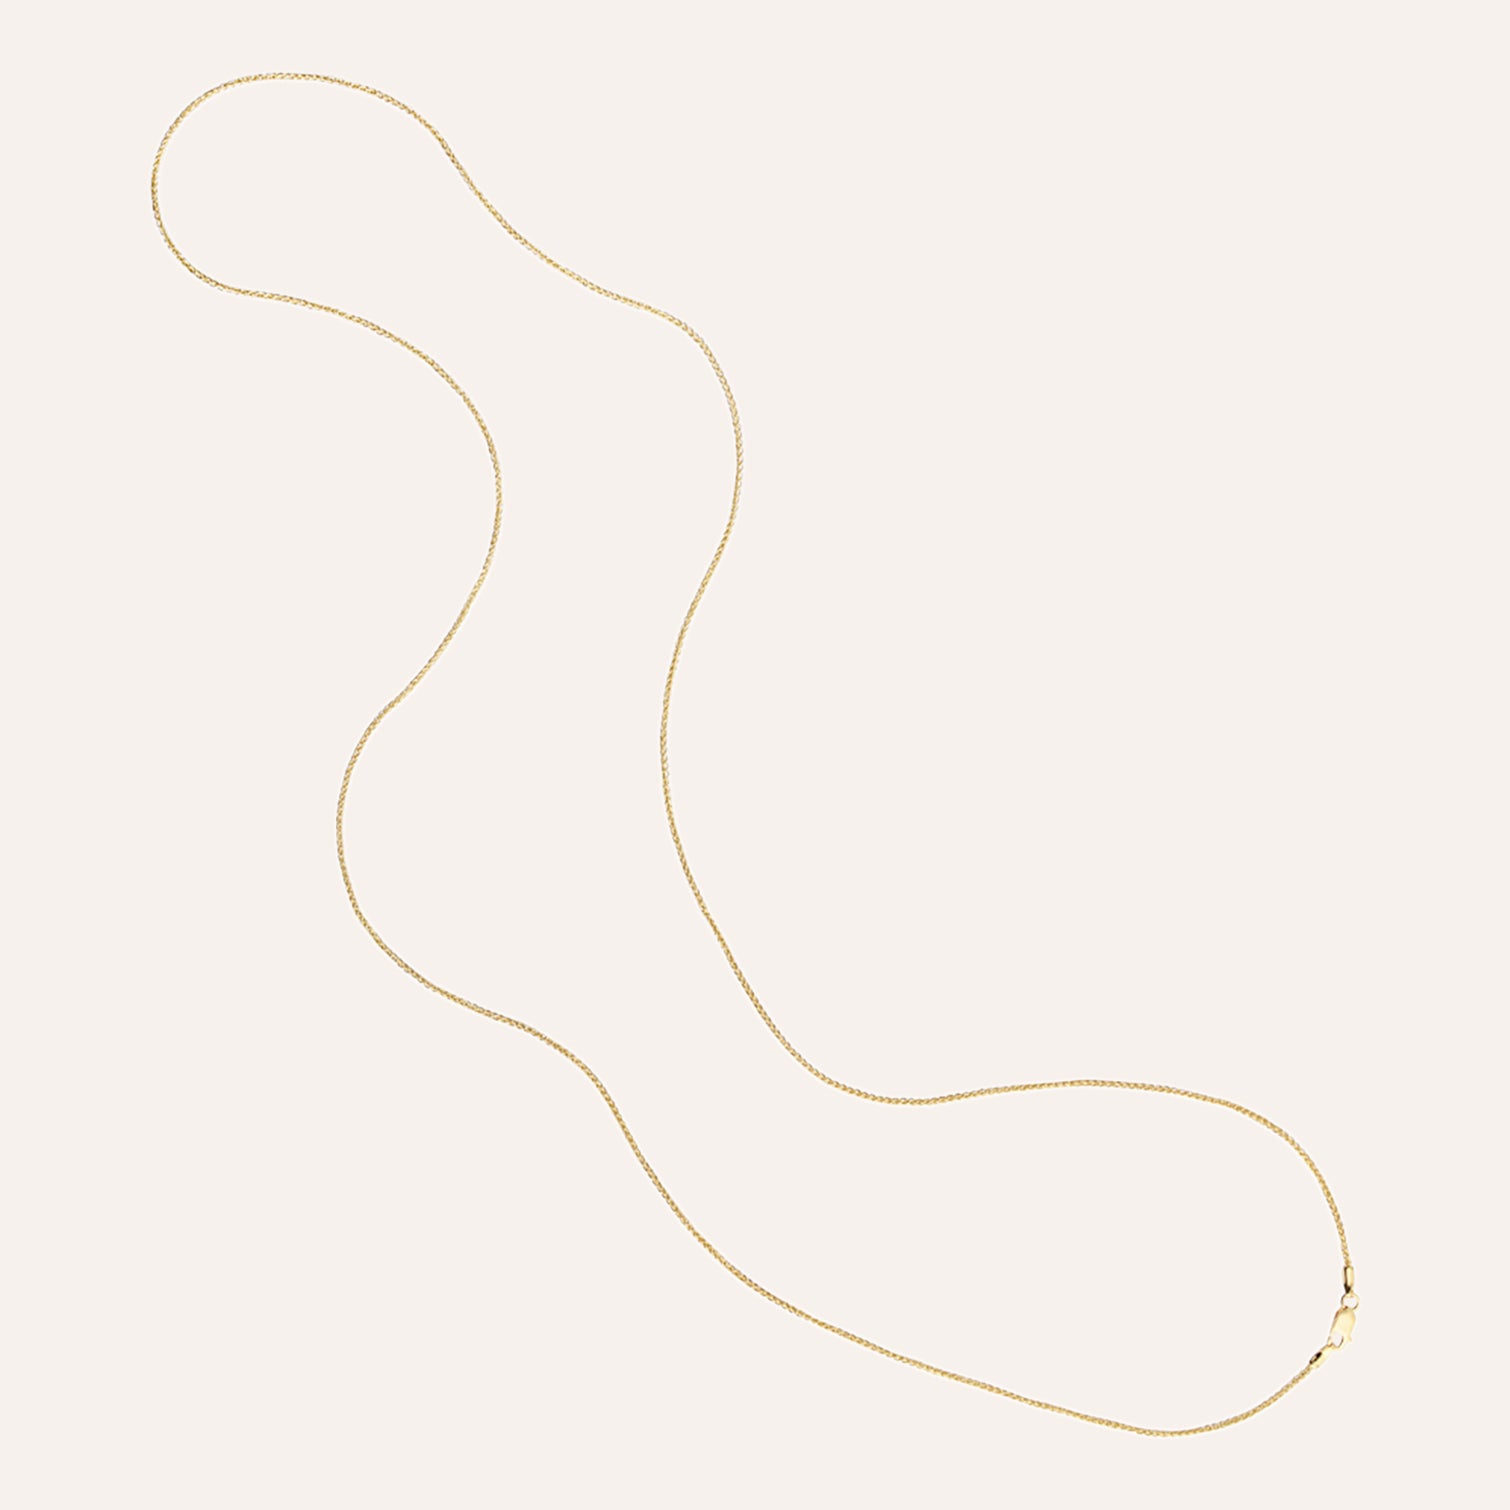 Round Wheat Necklace Chain, 30"L